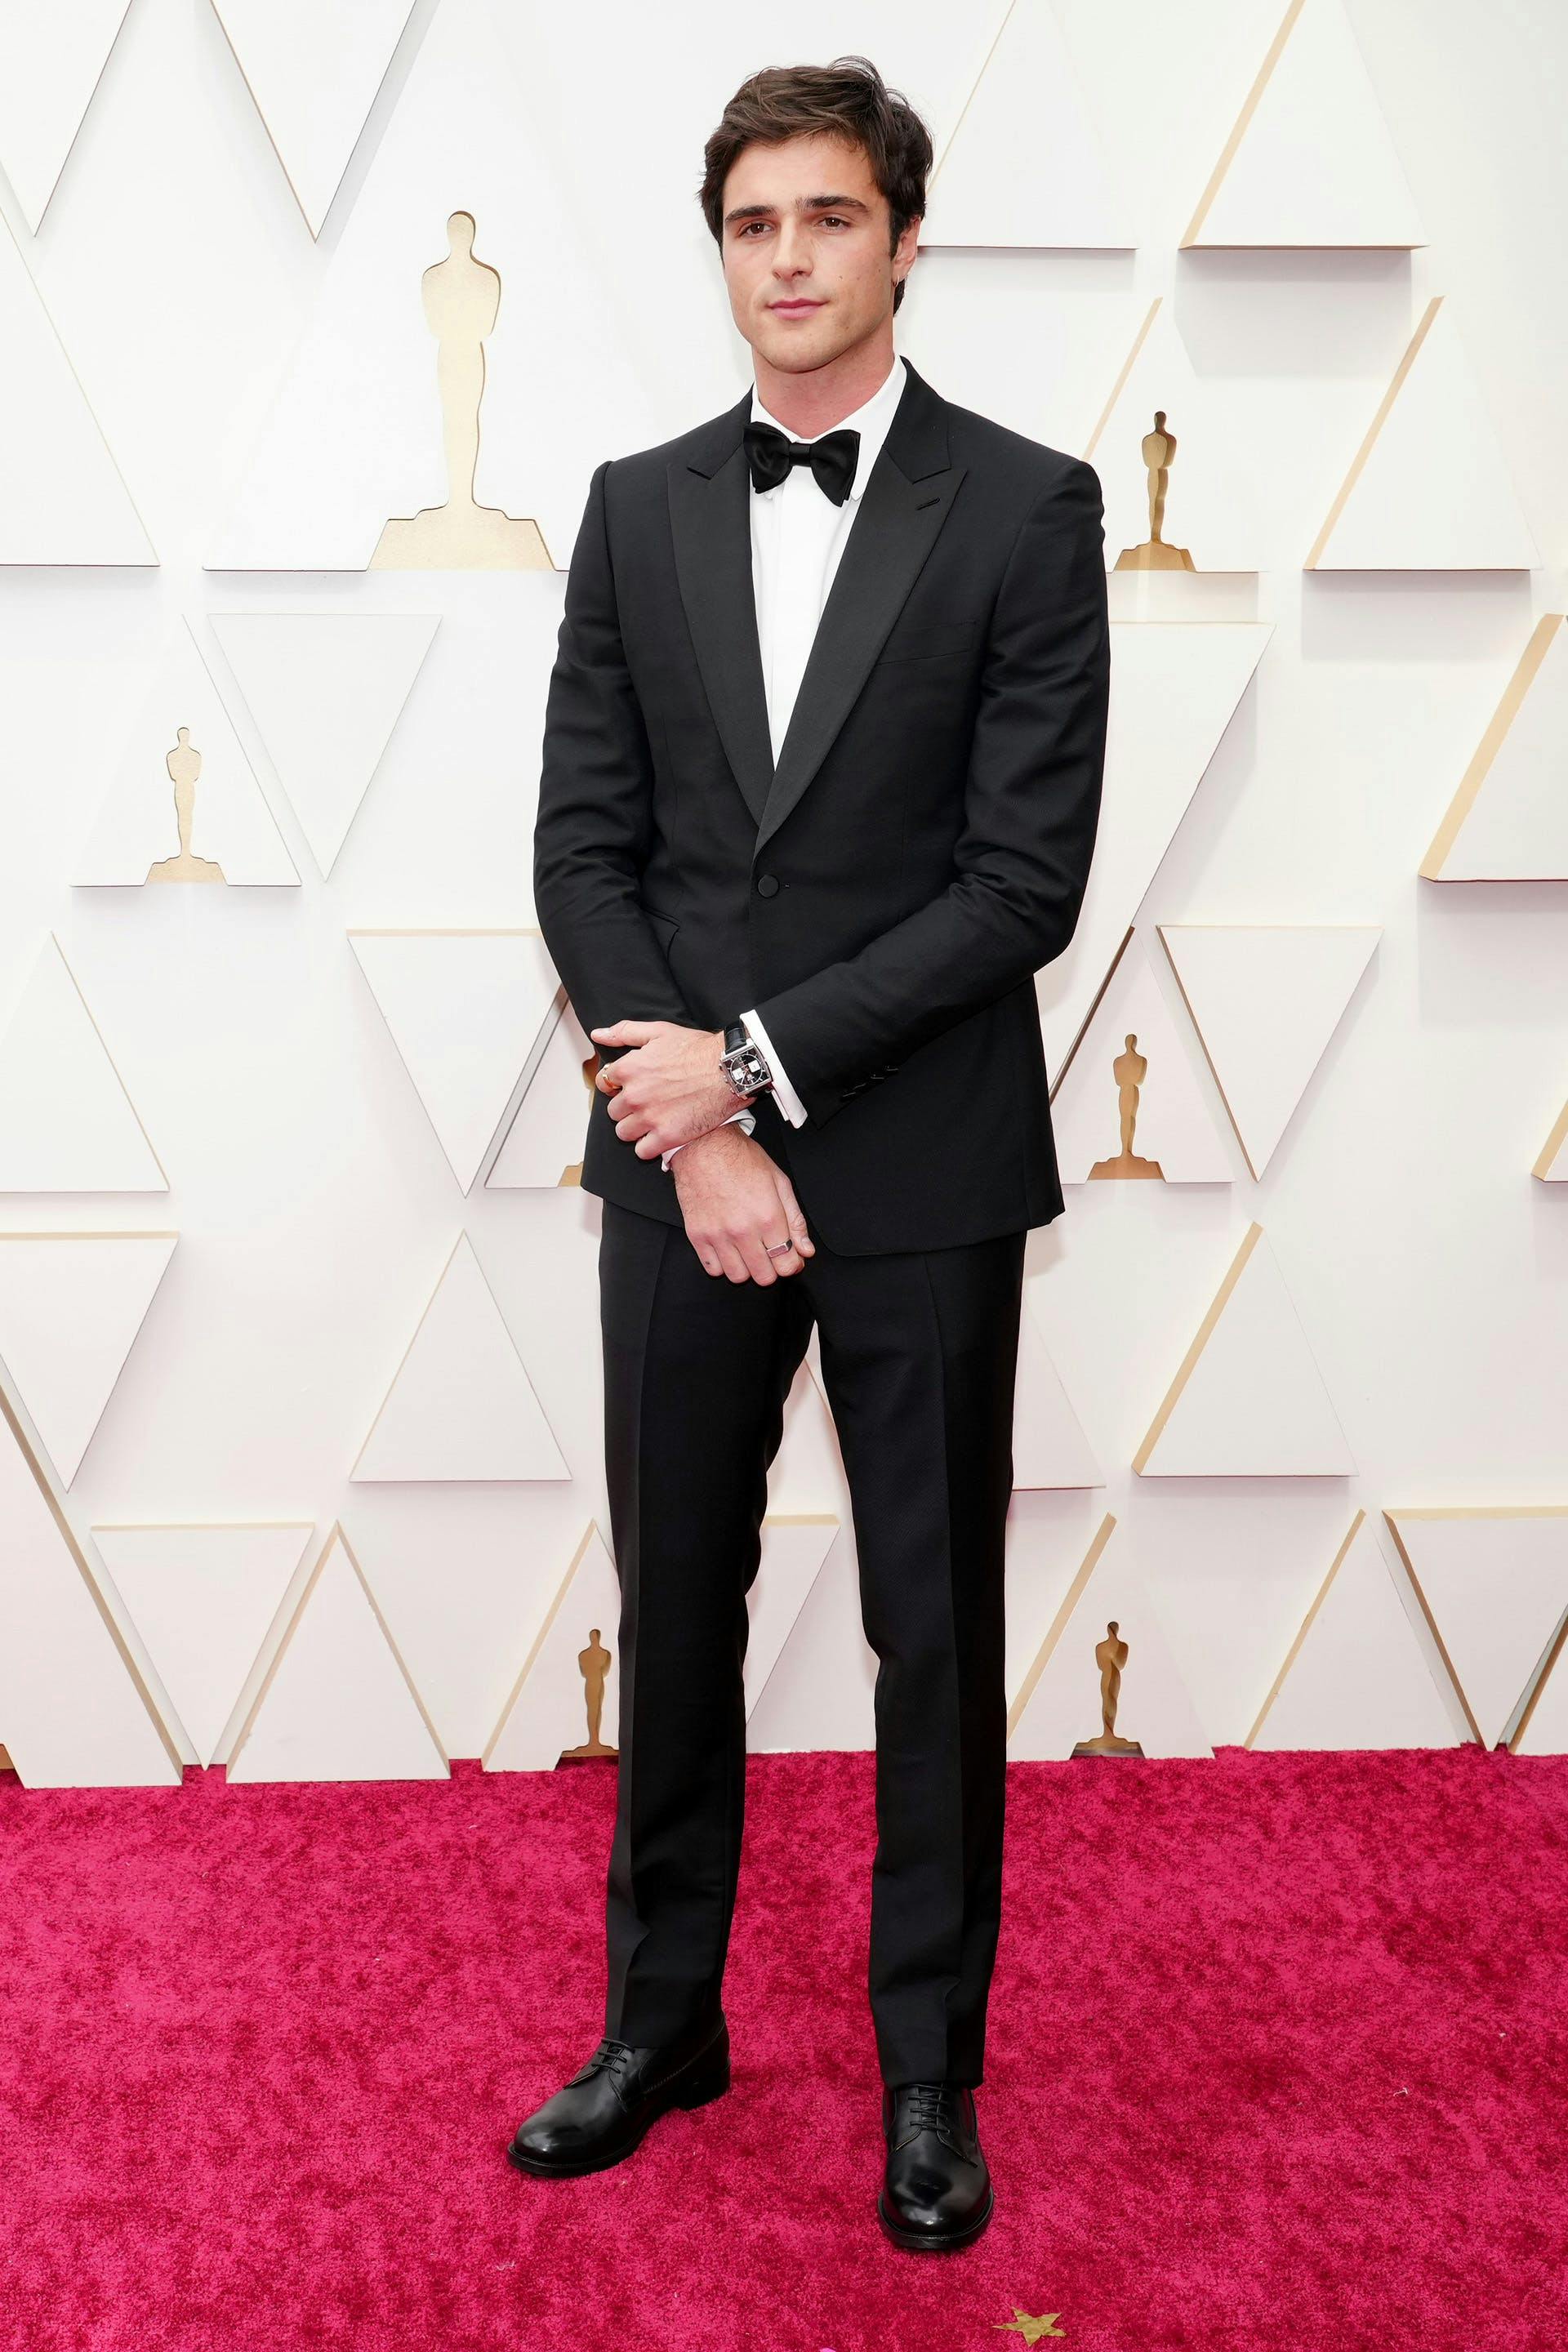 formal wear suit tuxedo adult male man person fashion coat standing